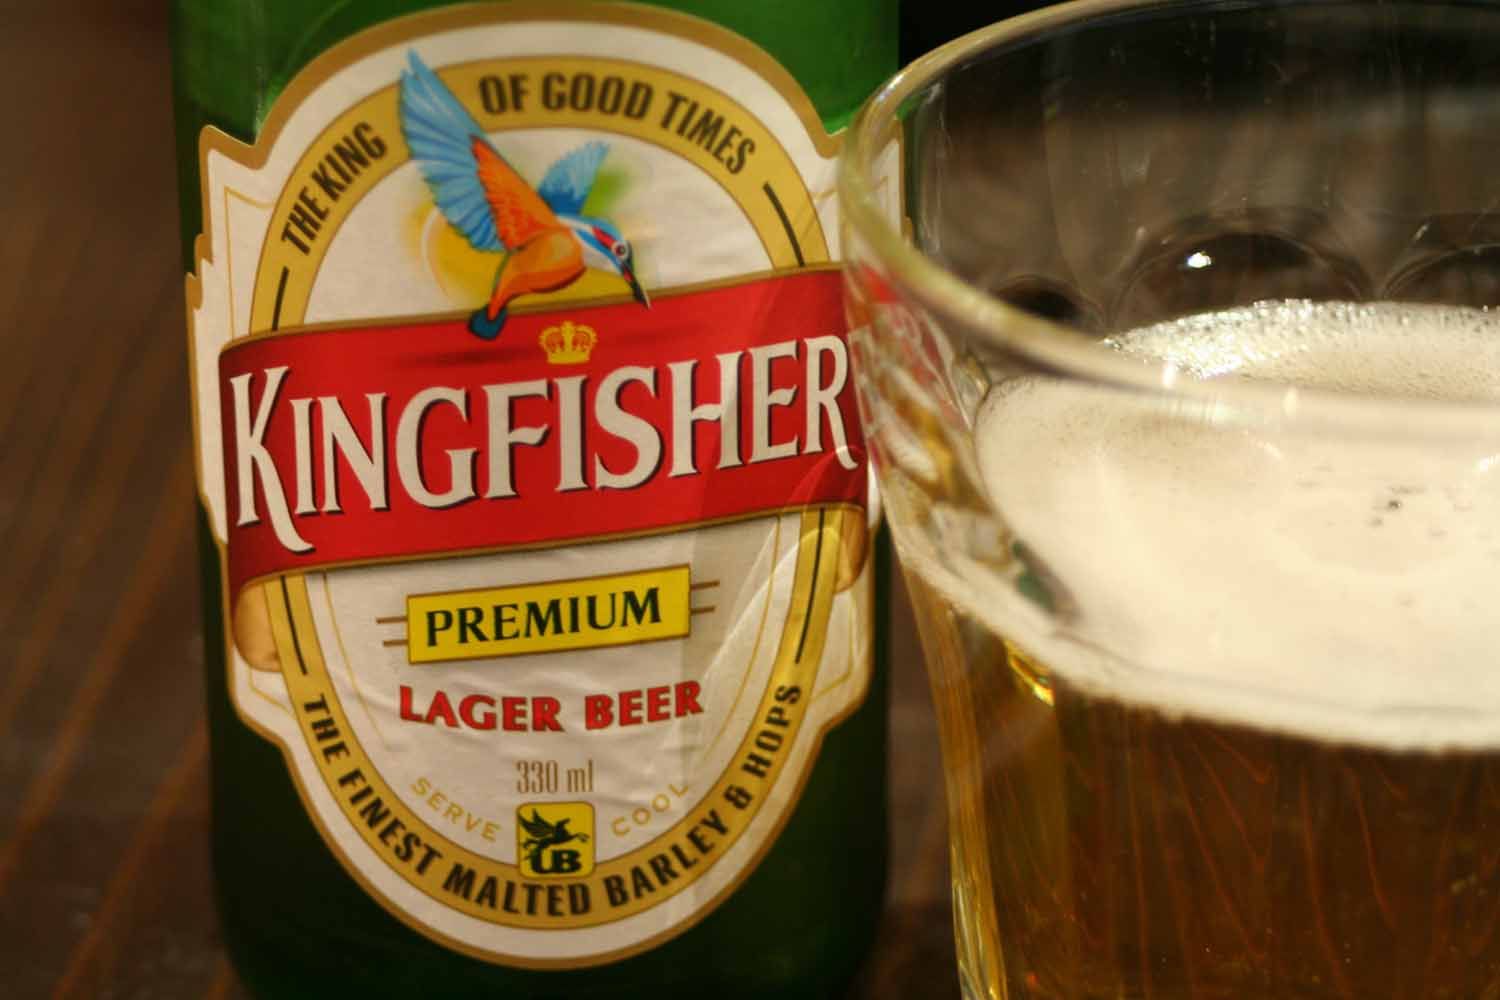 Kingfisher alcohol Stock Photos, Royalty Free Kingfisher alcohol Images |  Depositphotos